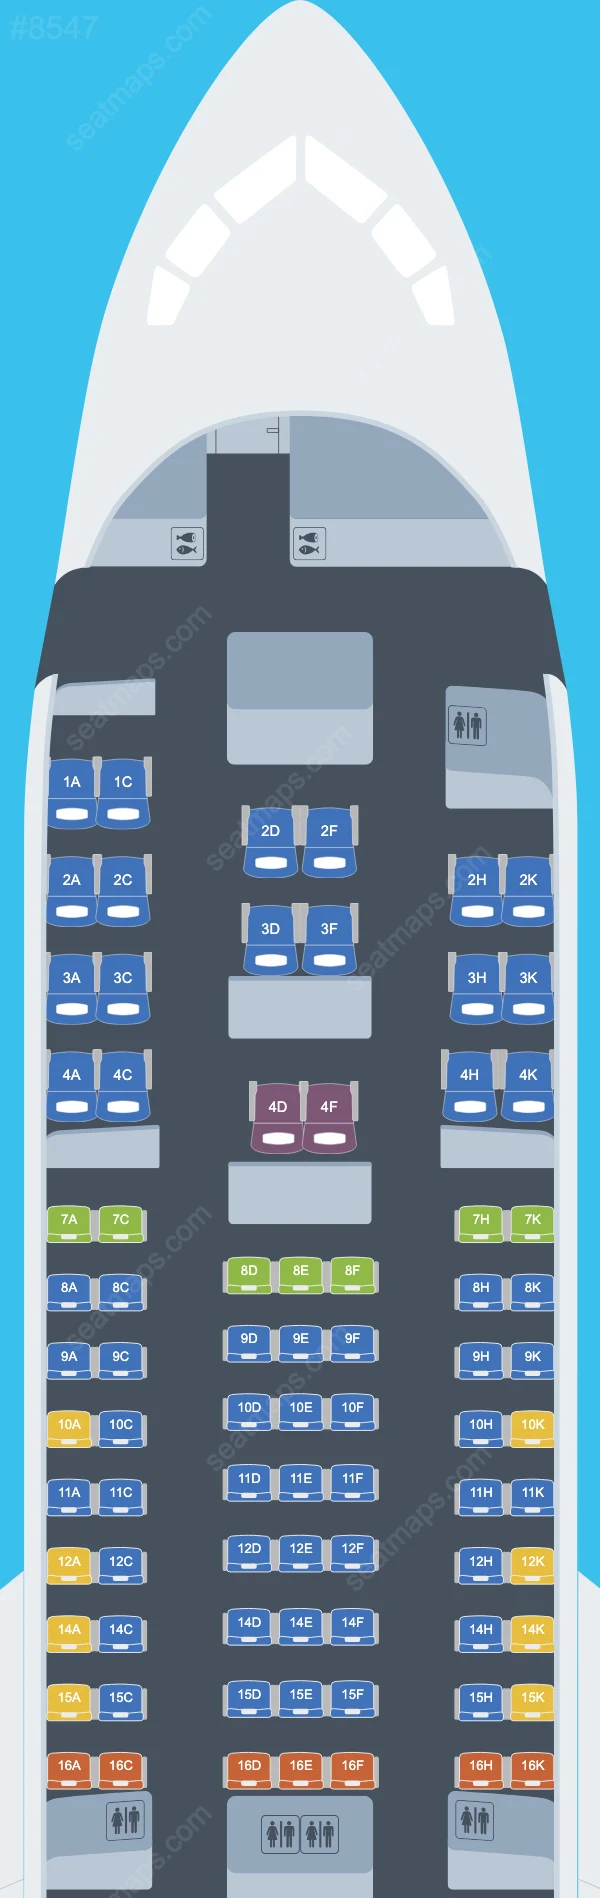 Omni Air International Boeing 767 Seat Maps 767-200 ER V.1